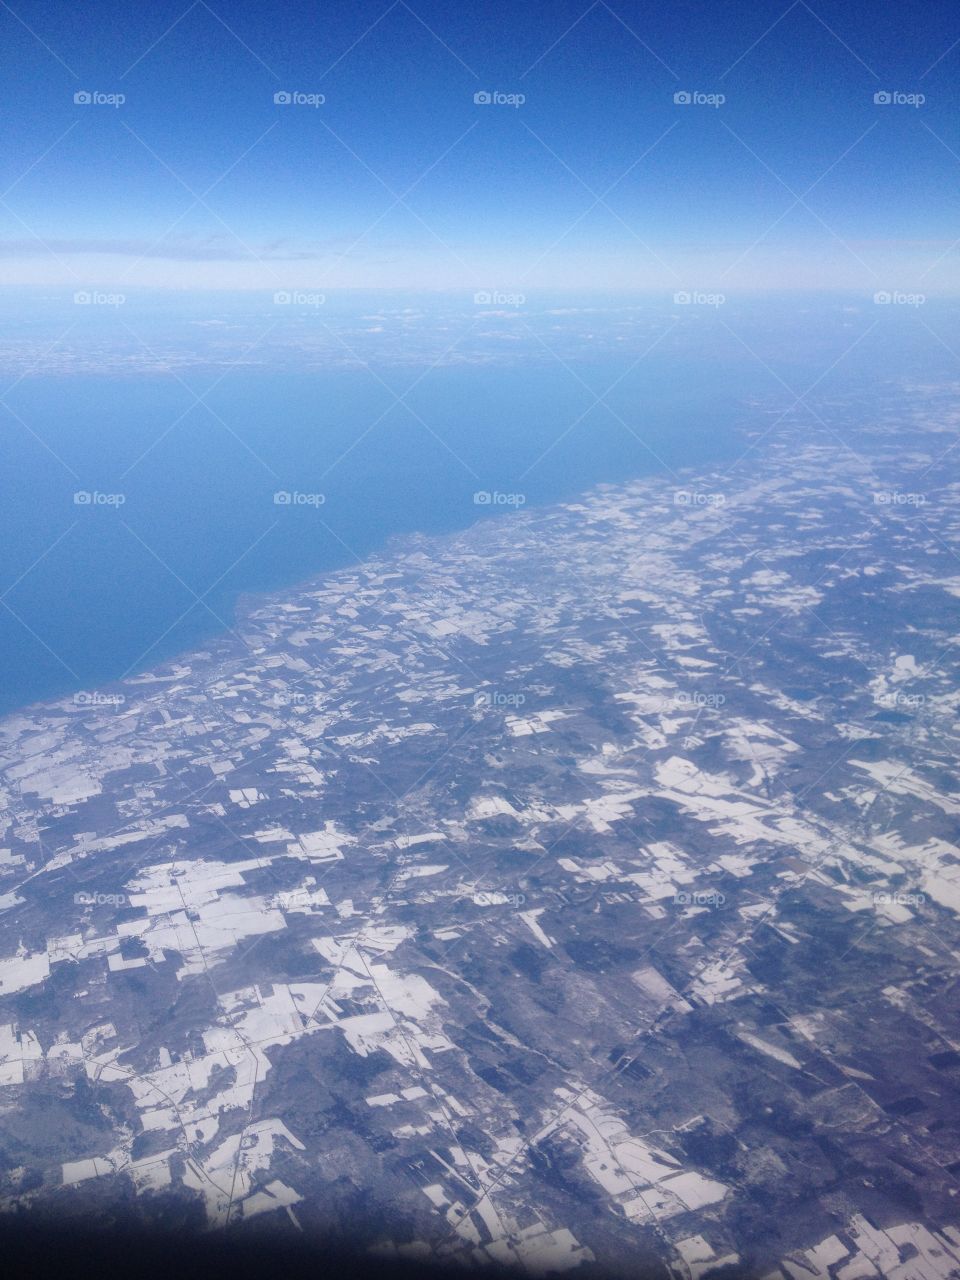 Lake Michigan. 